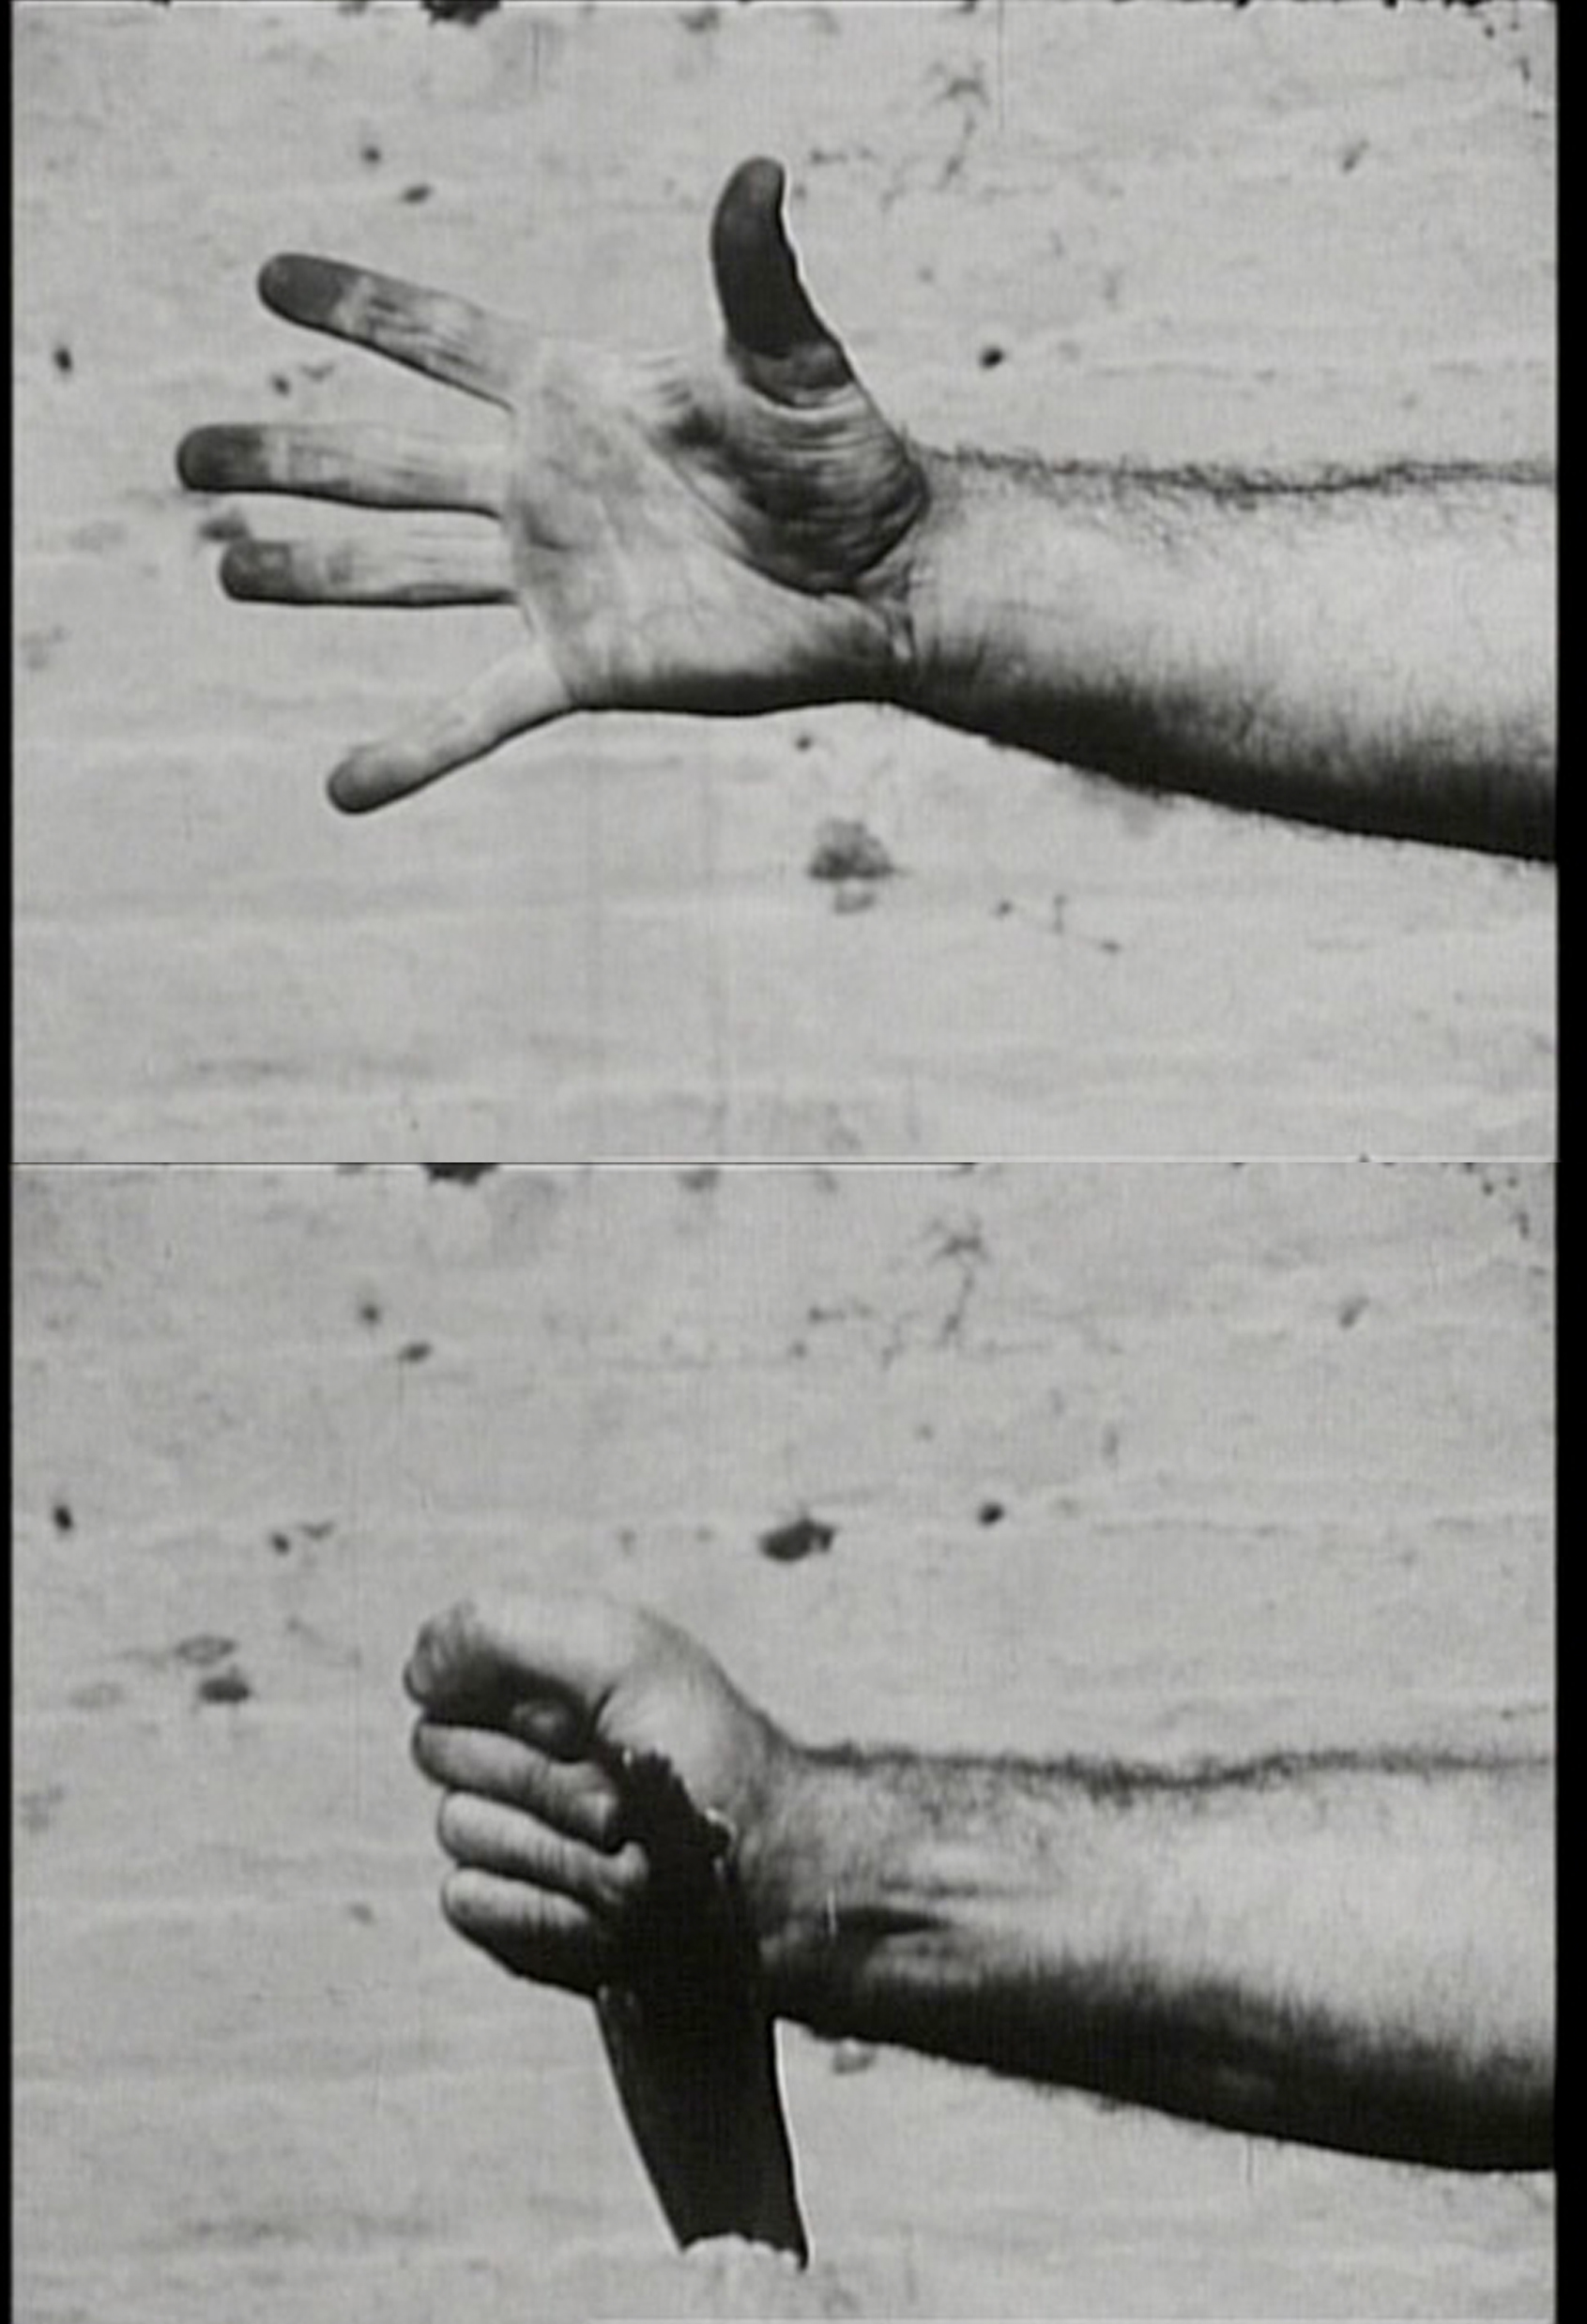 Richard Serra, Hand Catching Lead, Filmstills, 1968